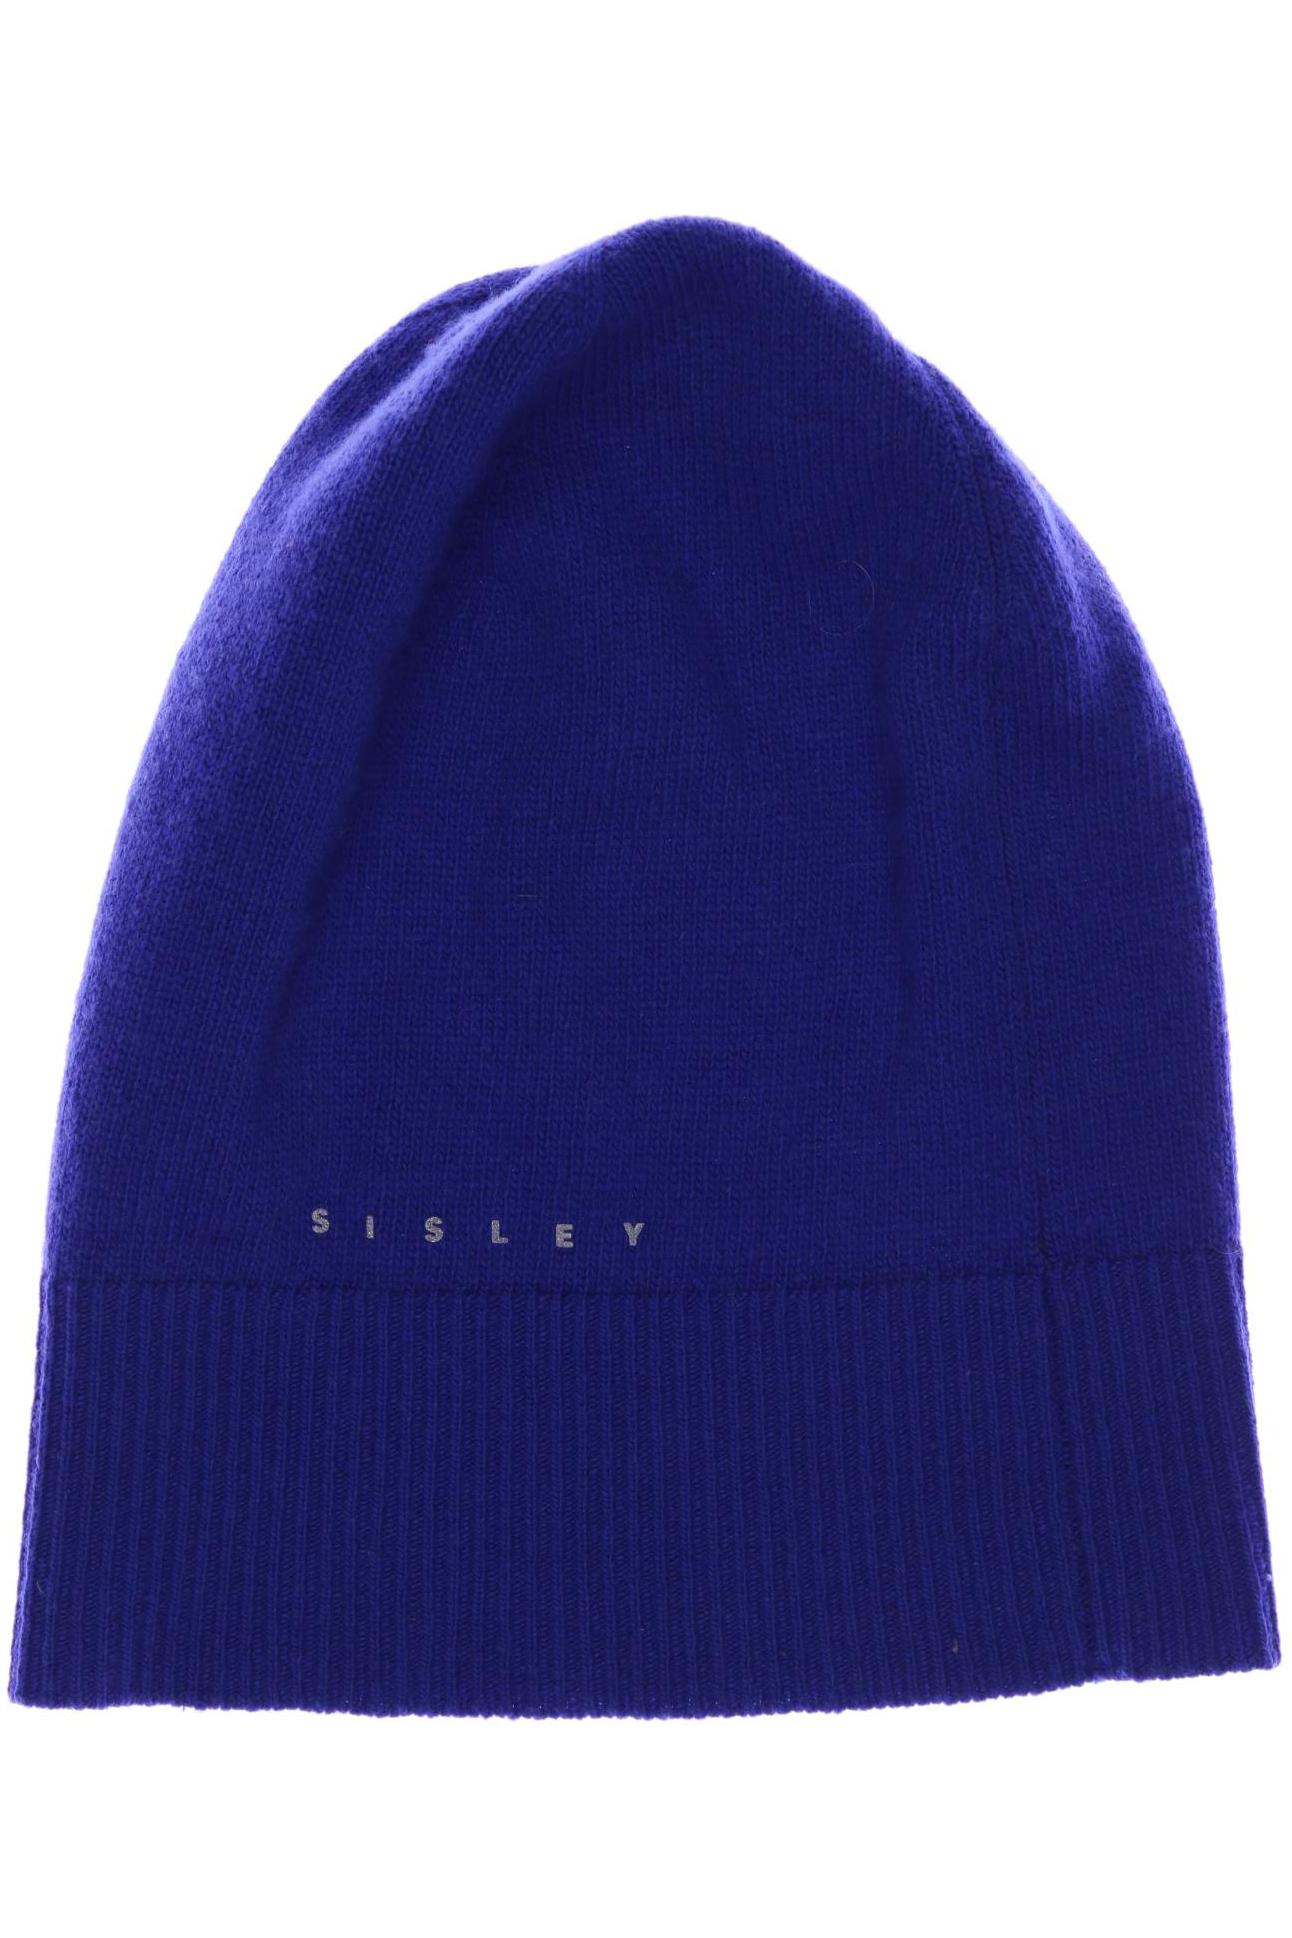 Sisley Damen Hut/Mütze, blau, Gr. uni von Sisley